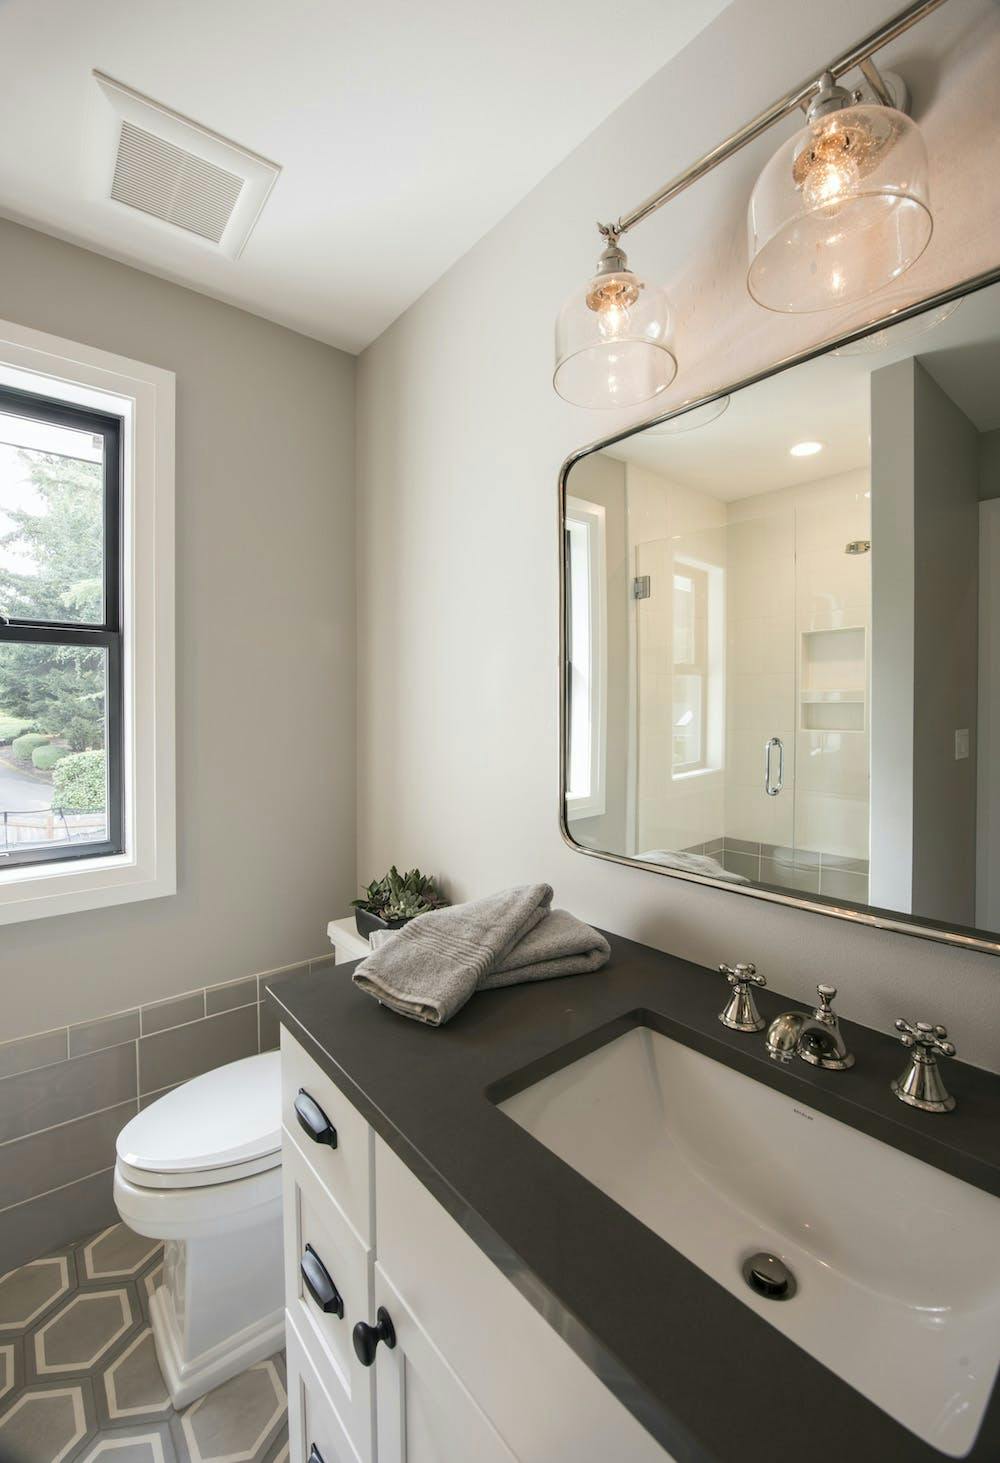 Image 36 of Landons Bathroom Silsetone Cemento Spa 1 in 2018 Northwest Idea House Features Dekton & Silestone Surfaces - Cosentino